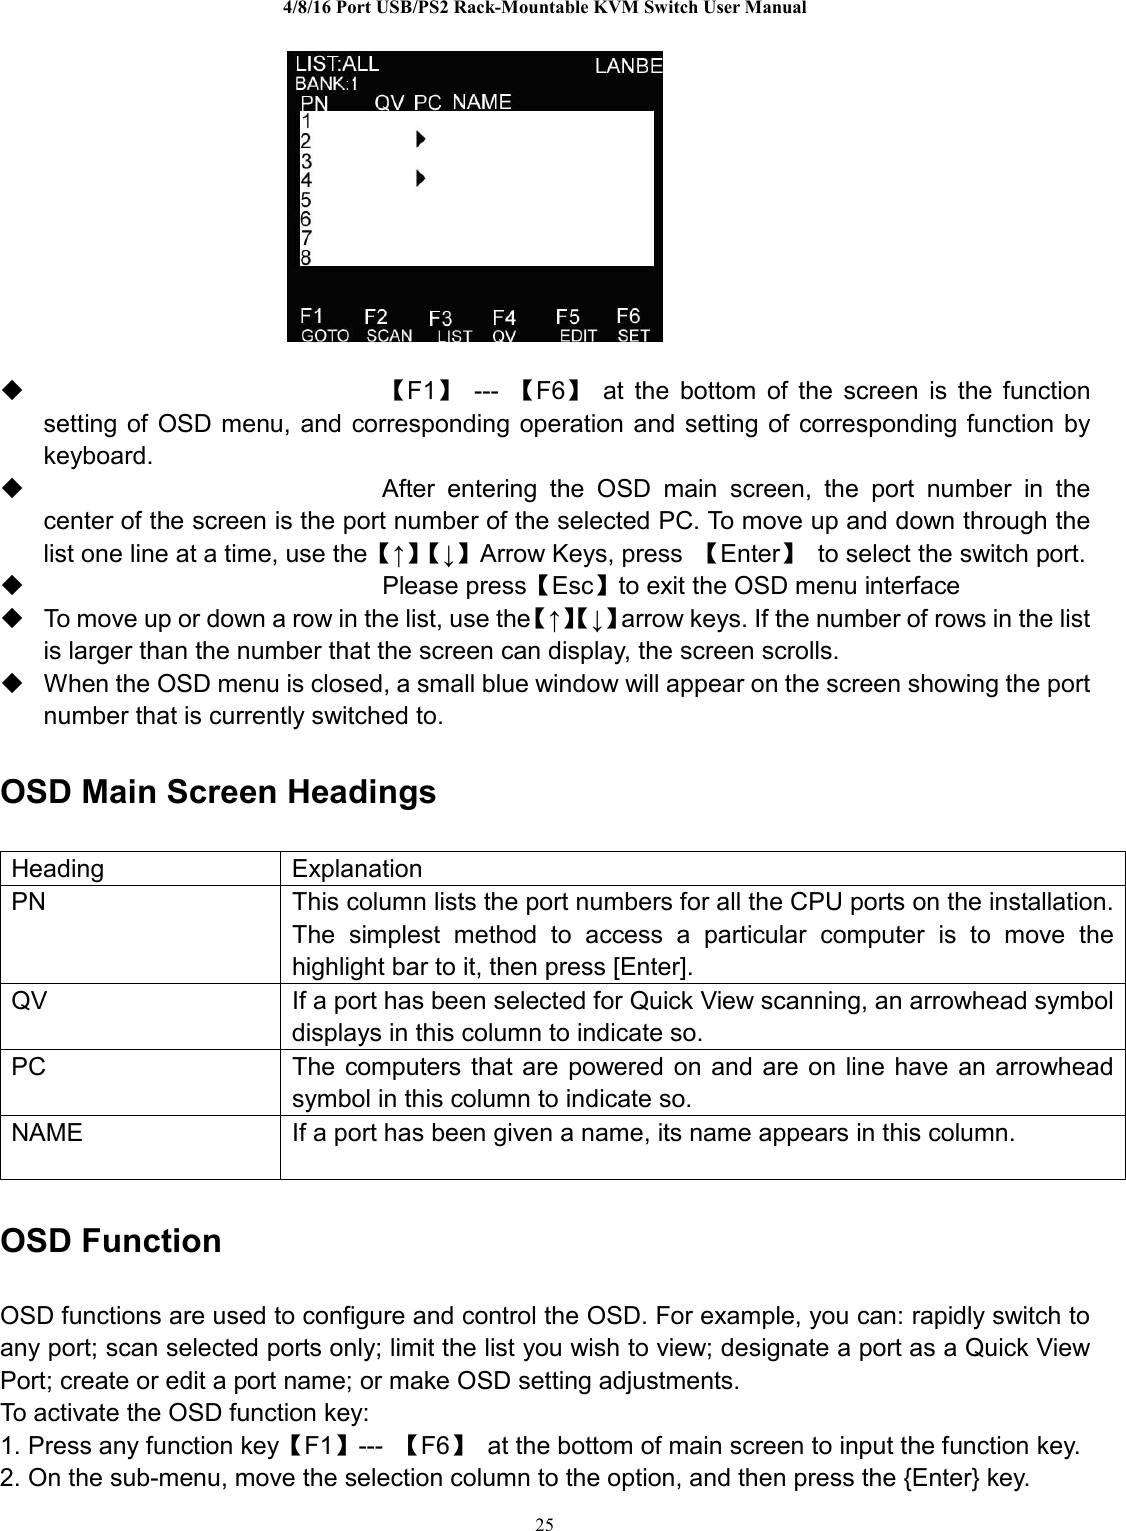 4/8/16 Port USB/PS2 RackMountable KVM Switch User Manual 25  【】 ;;; 【B】         &apos;49. %   &apos;49       &amp;【R】【S】%3 【2】  &amp;【2】#&apos;49 【R】【S】.! 5&apos;49OSD Main Screen Headings   2#&amp;0 &amp;1           F2G DC !D.C&amp;      0%/2 !OSD Function &apos;49&apos;49#)IIID.C&amp;II.&apos;49(&apos;49.)&amp;.【】;;; 【B】 .,&apos;;T2U.